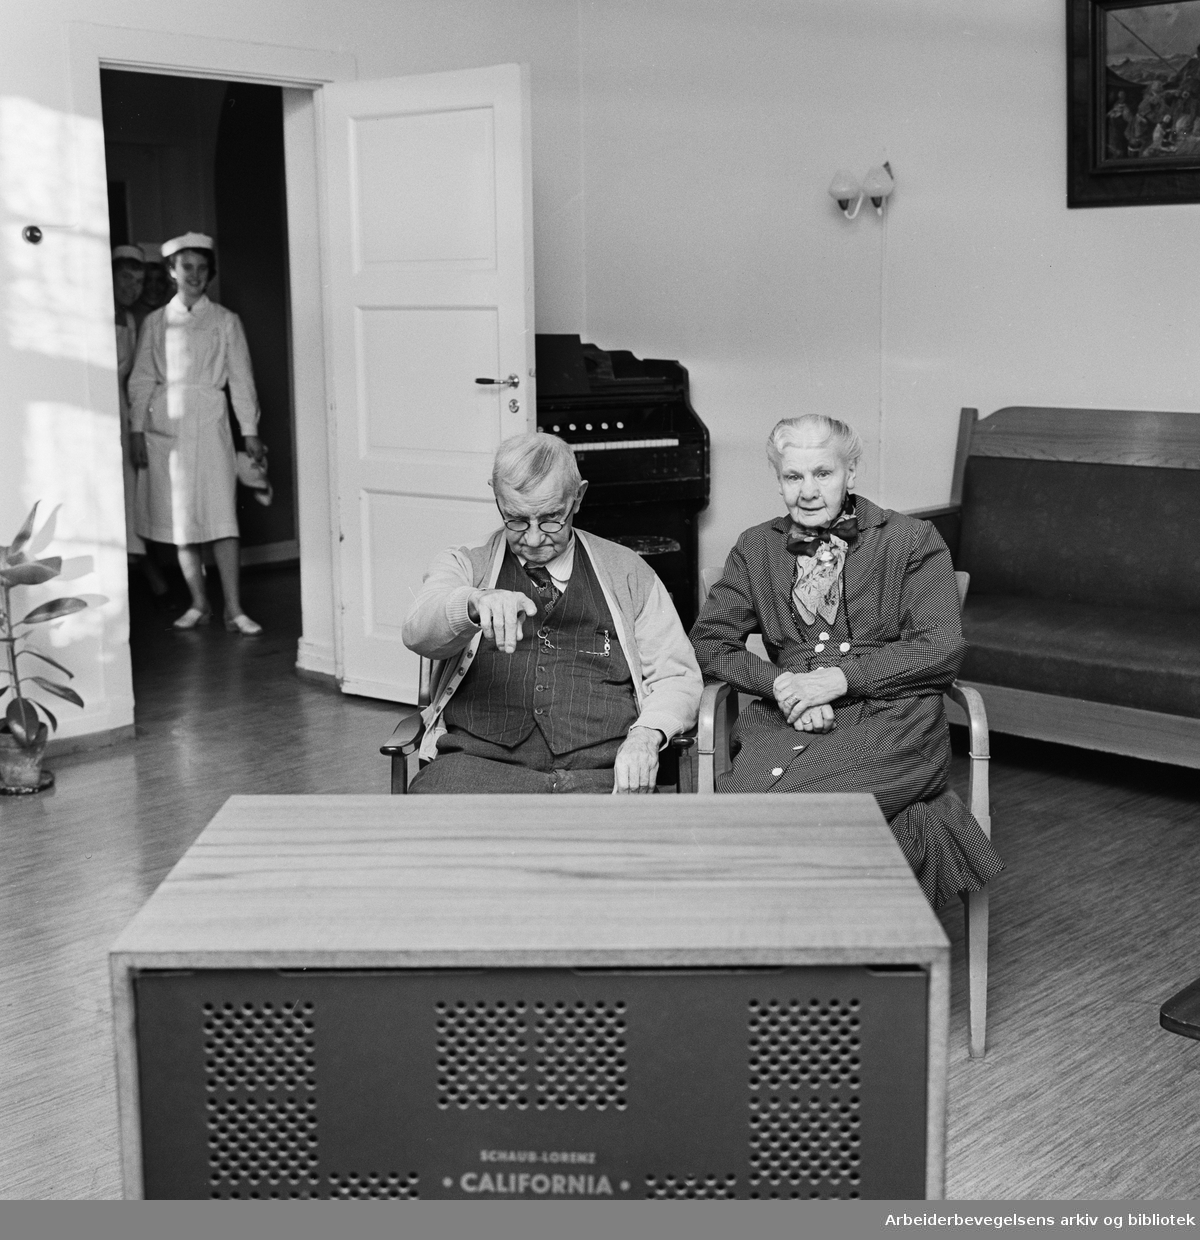 Adamstuen aldershjem har fått tv. Beboerne Eugen Olsen og fru Holst Jensen følger interessert med. Januar 1962